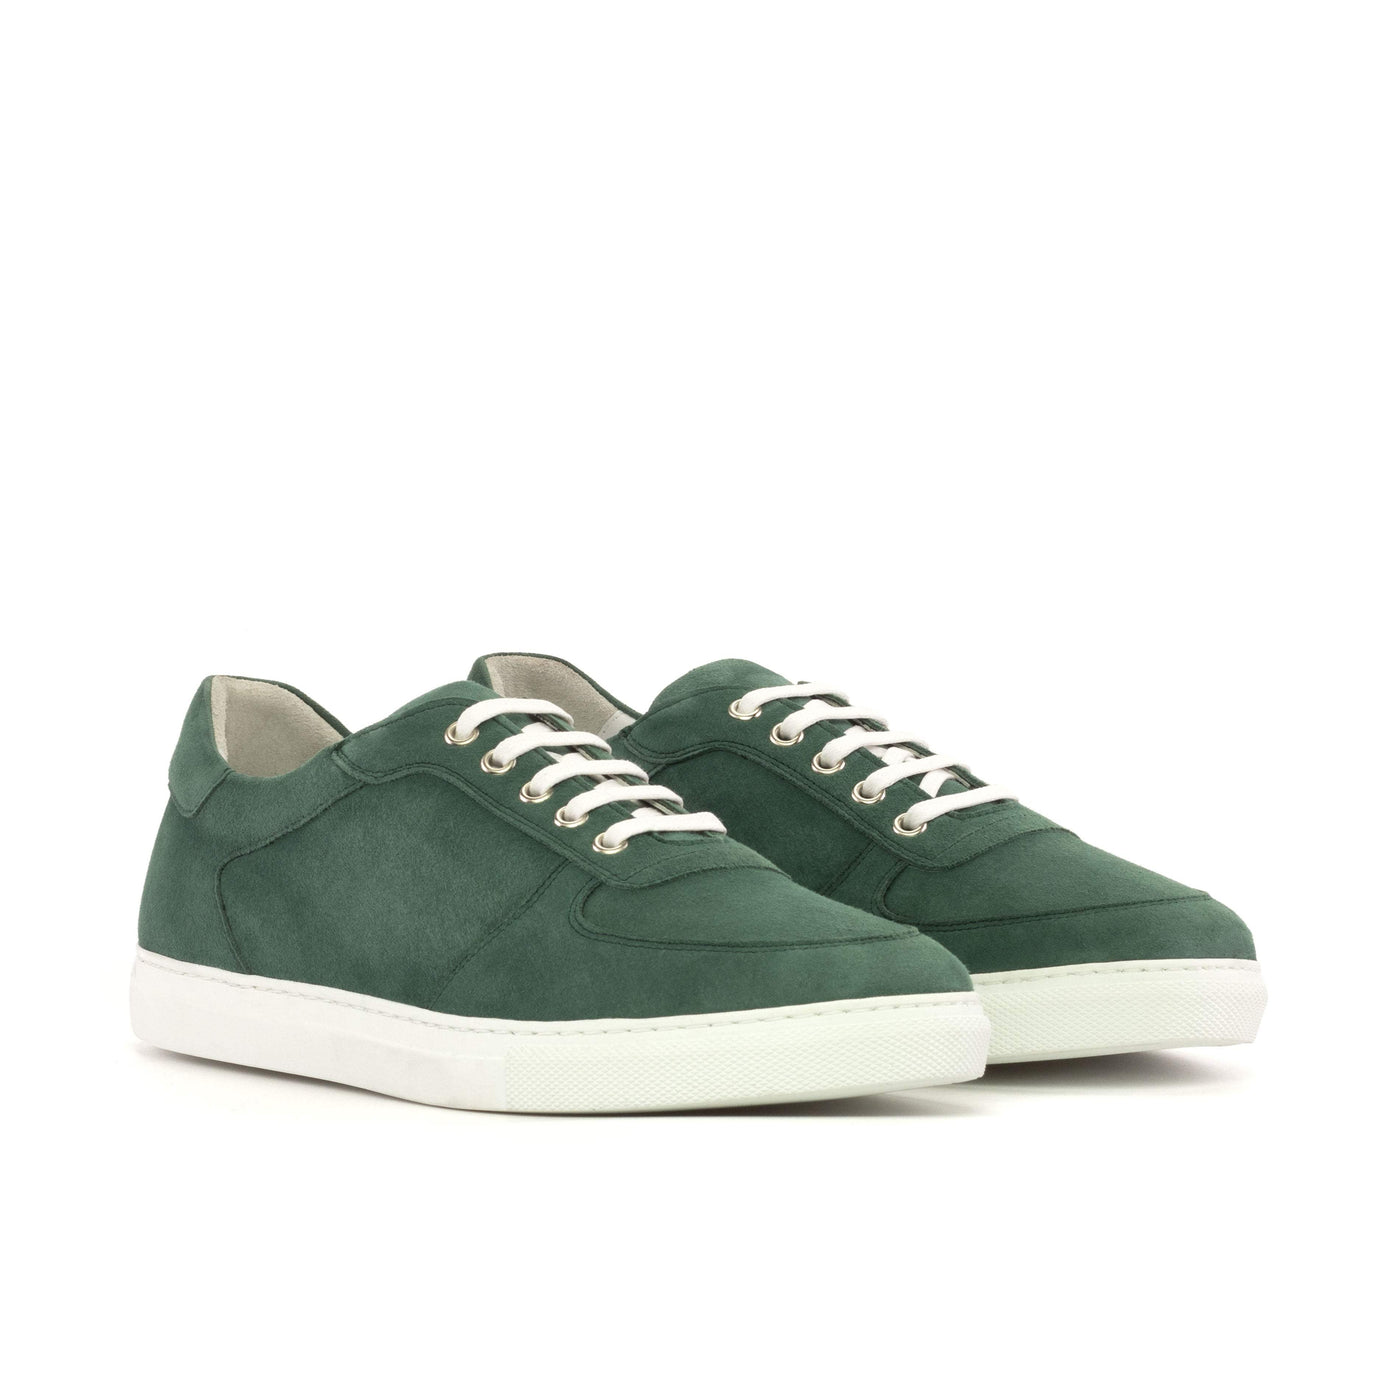 Men's Low Top Trainer Shoes Leather Green 5469 3- MERRIMIUM